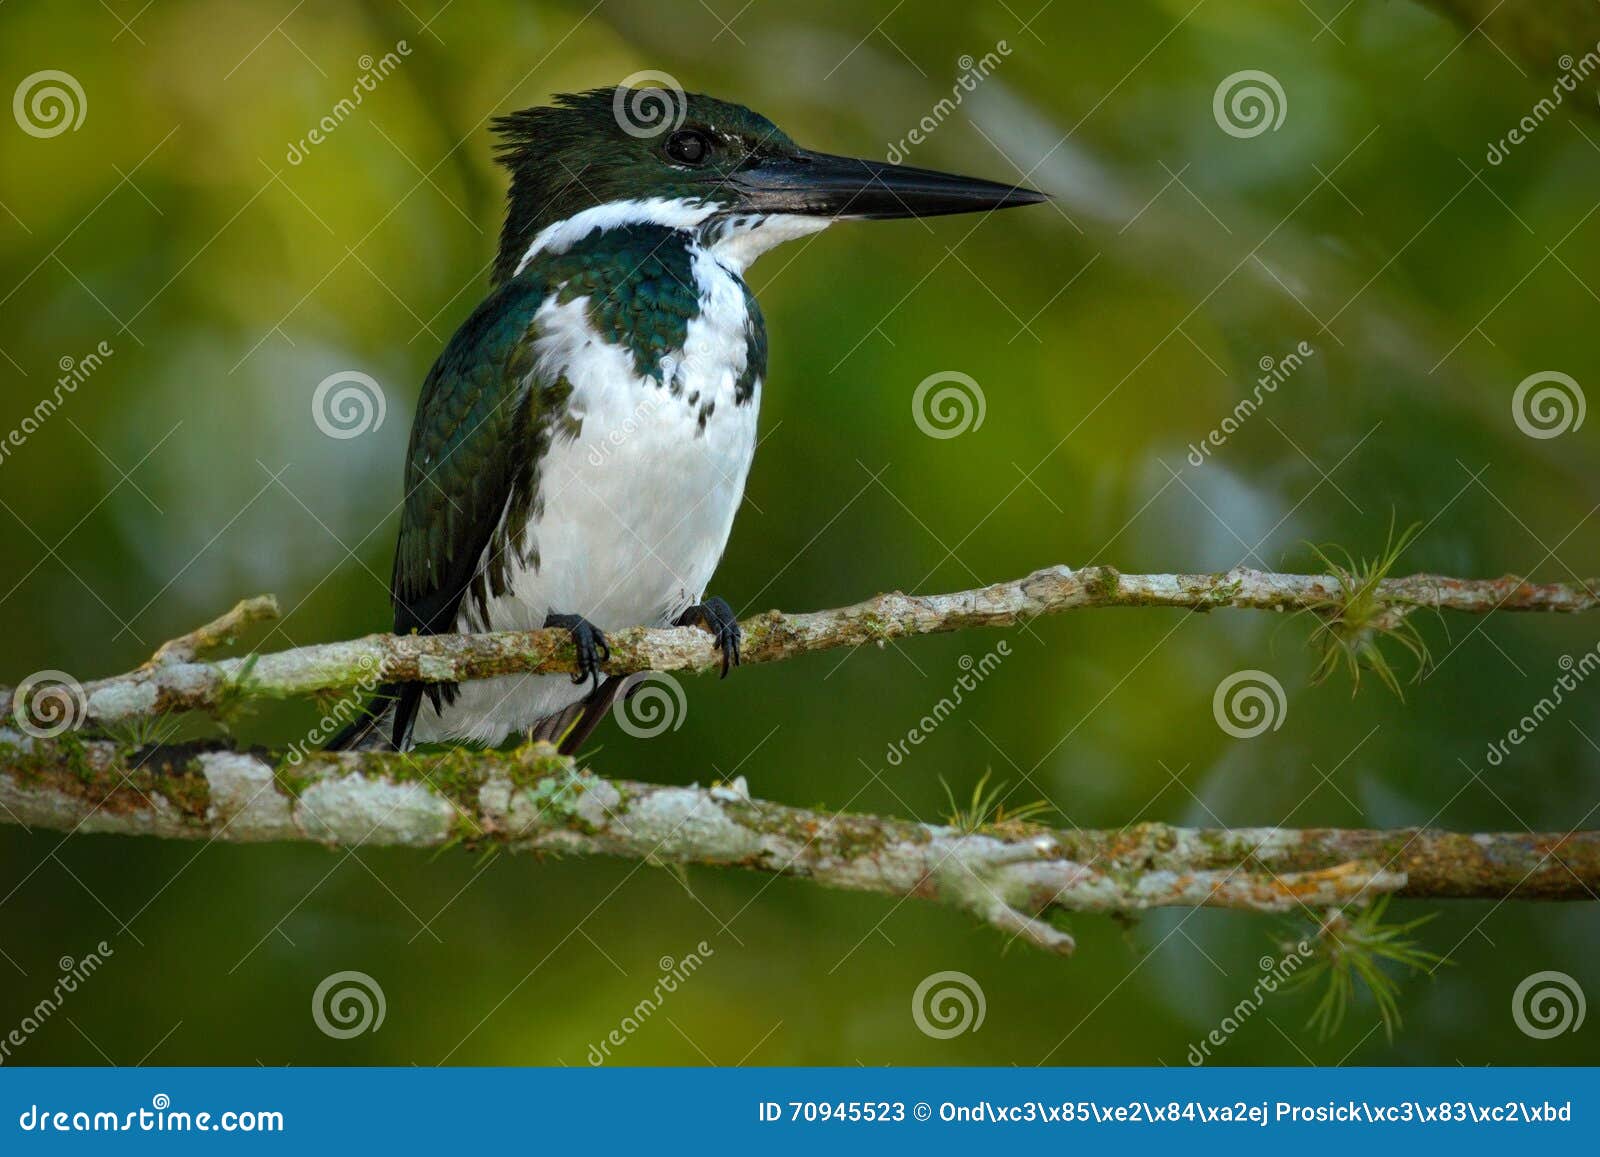 amazon kingfisher, chloroceryle amazona. green and white kingfisher bird sitting on the branch. kingfisher in the nature habitat